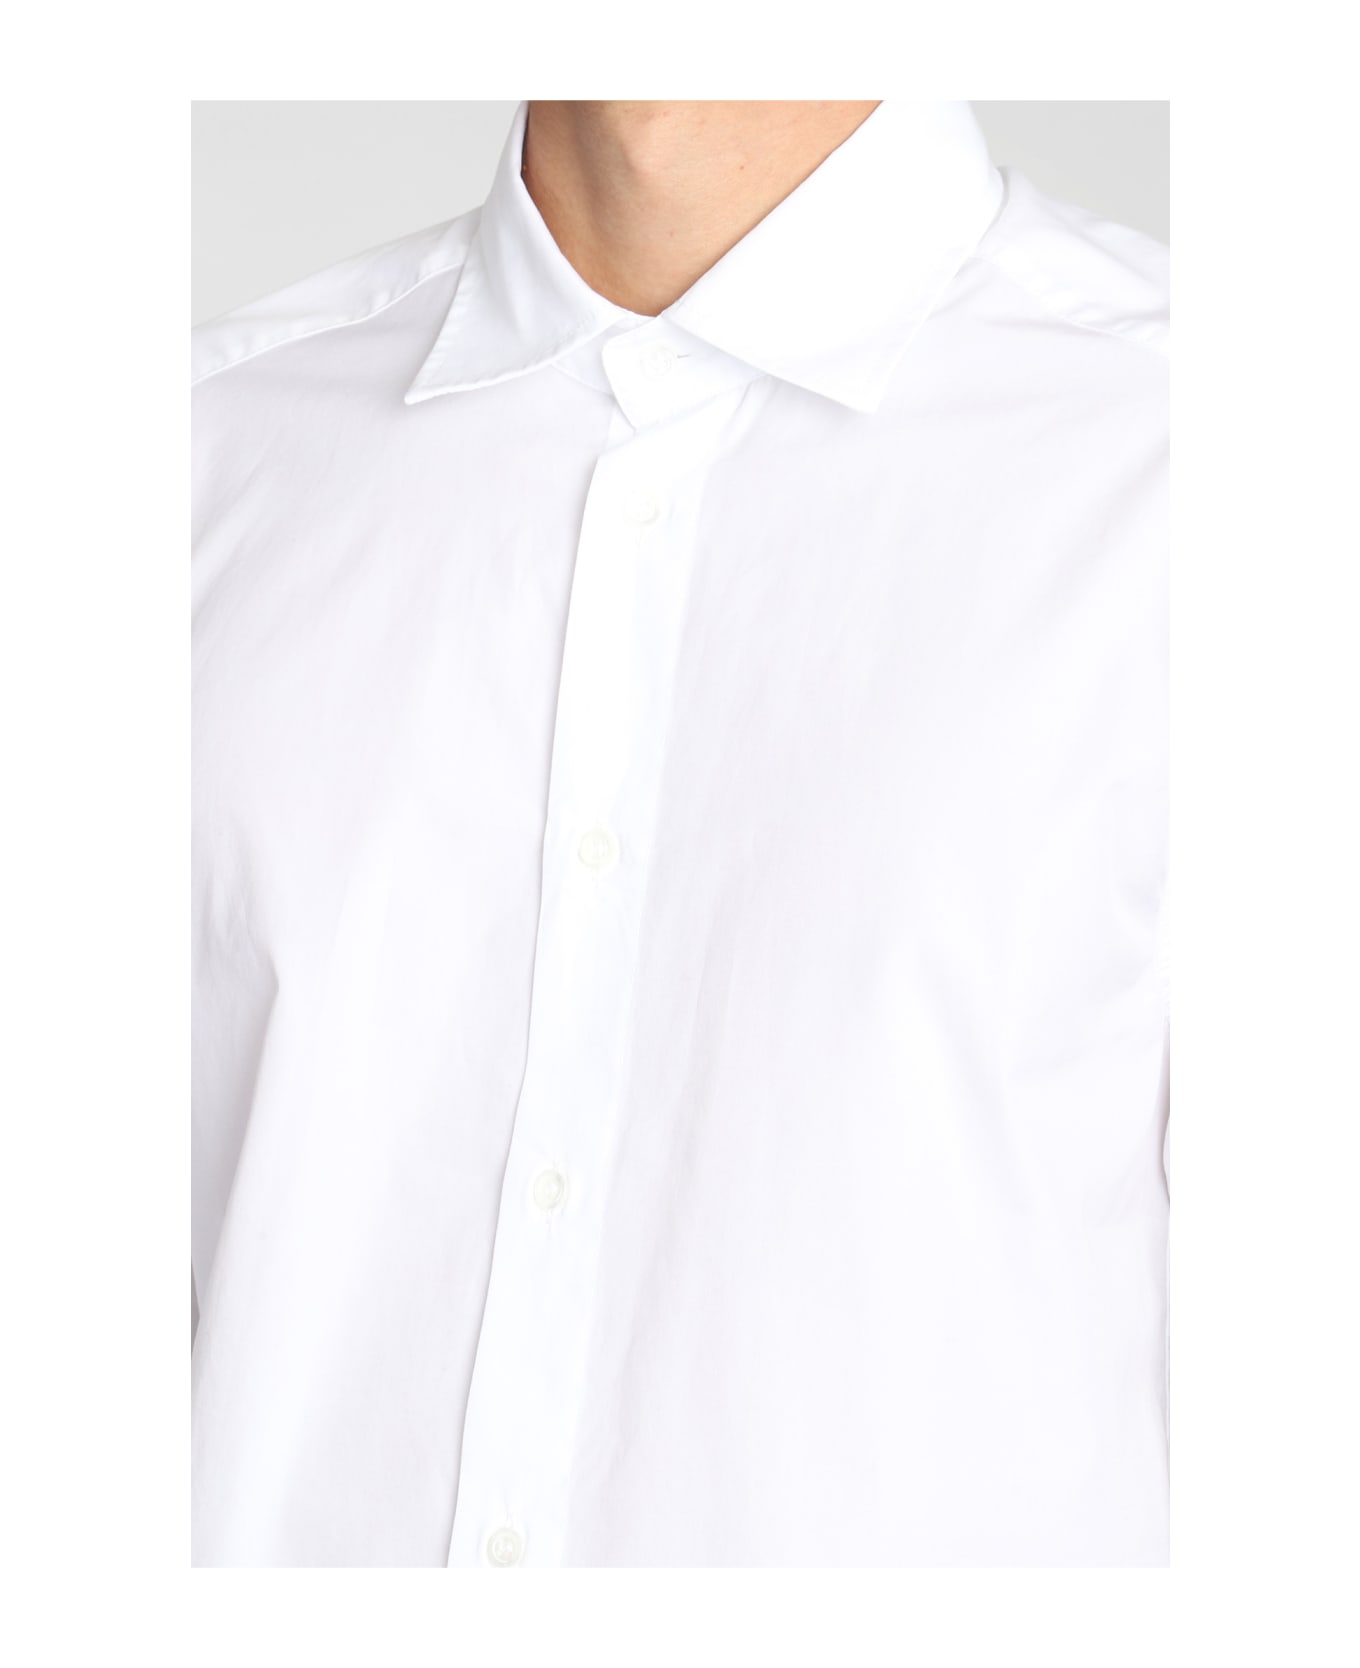 Barena Surian Shirt In White Cotton - white